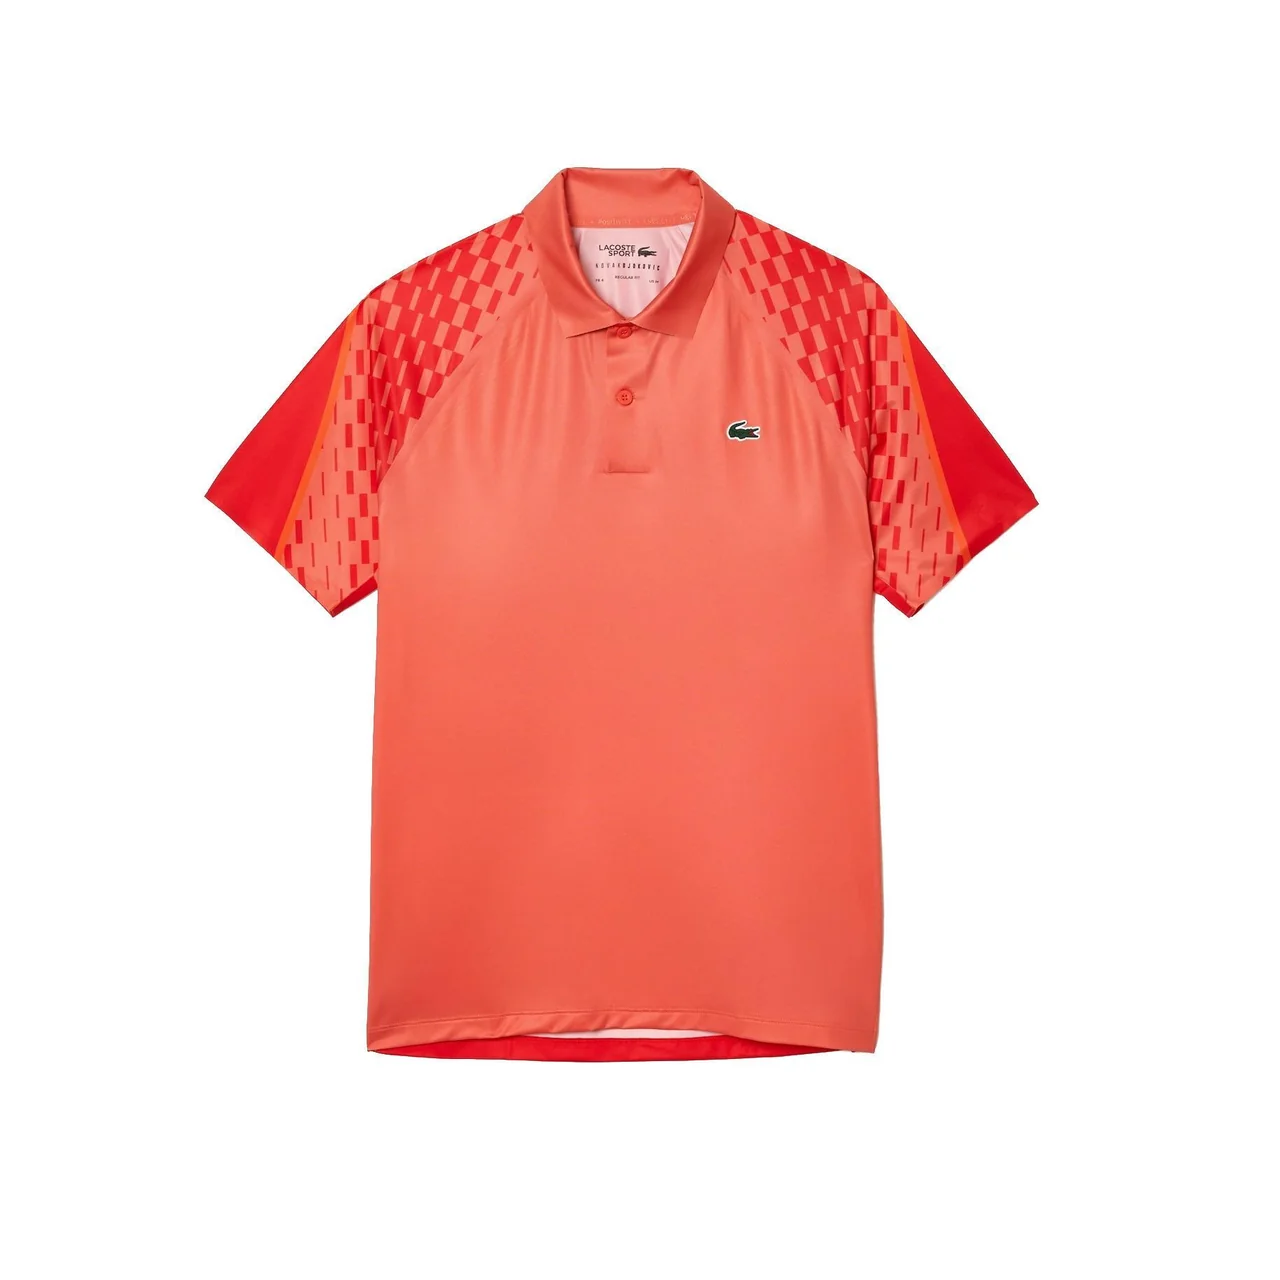 Lacoste Novak Djokovic Tricolour Polo Shirt Orange/Red